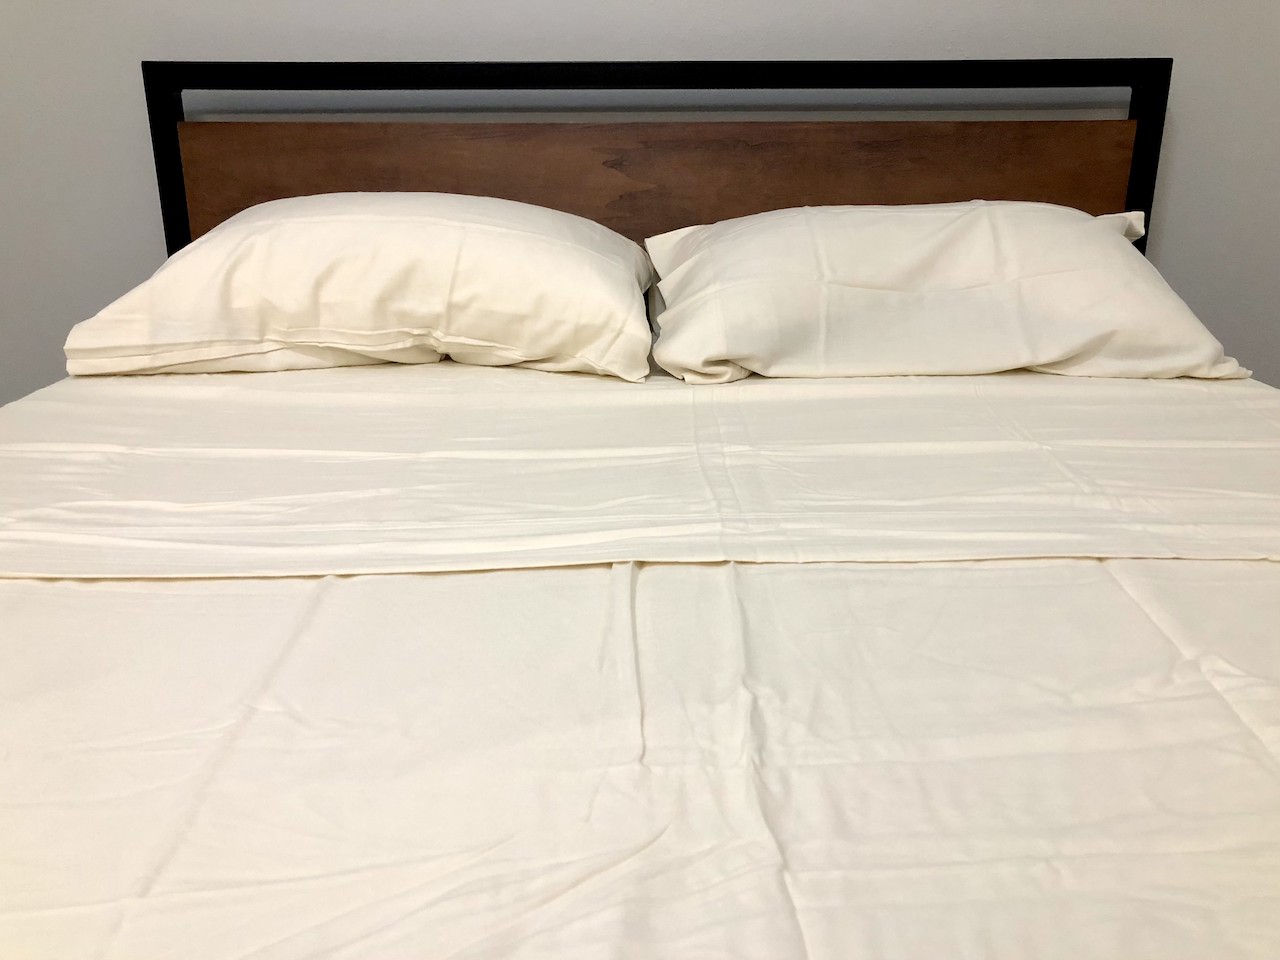 sheets & giggle warmest bed sheets